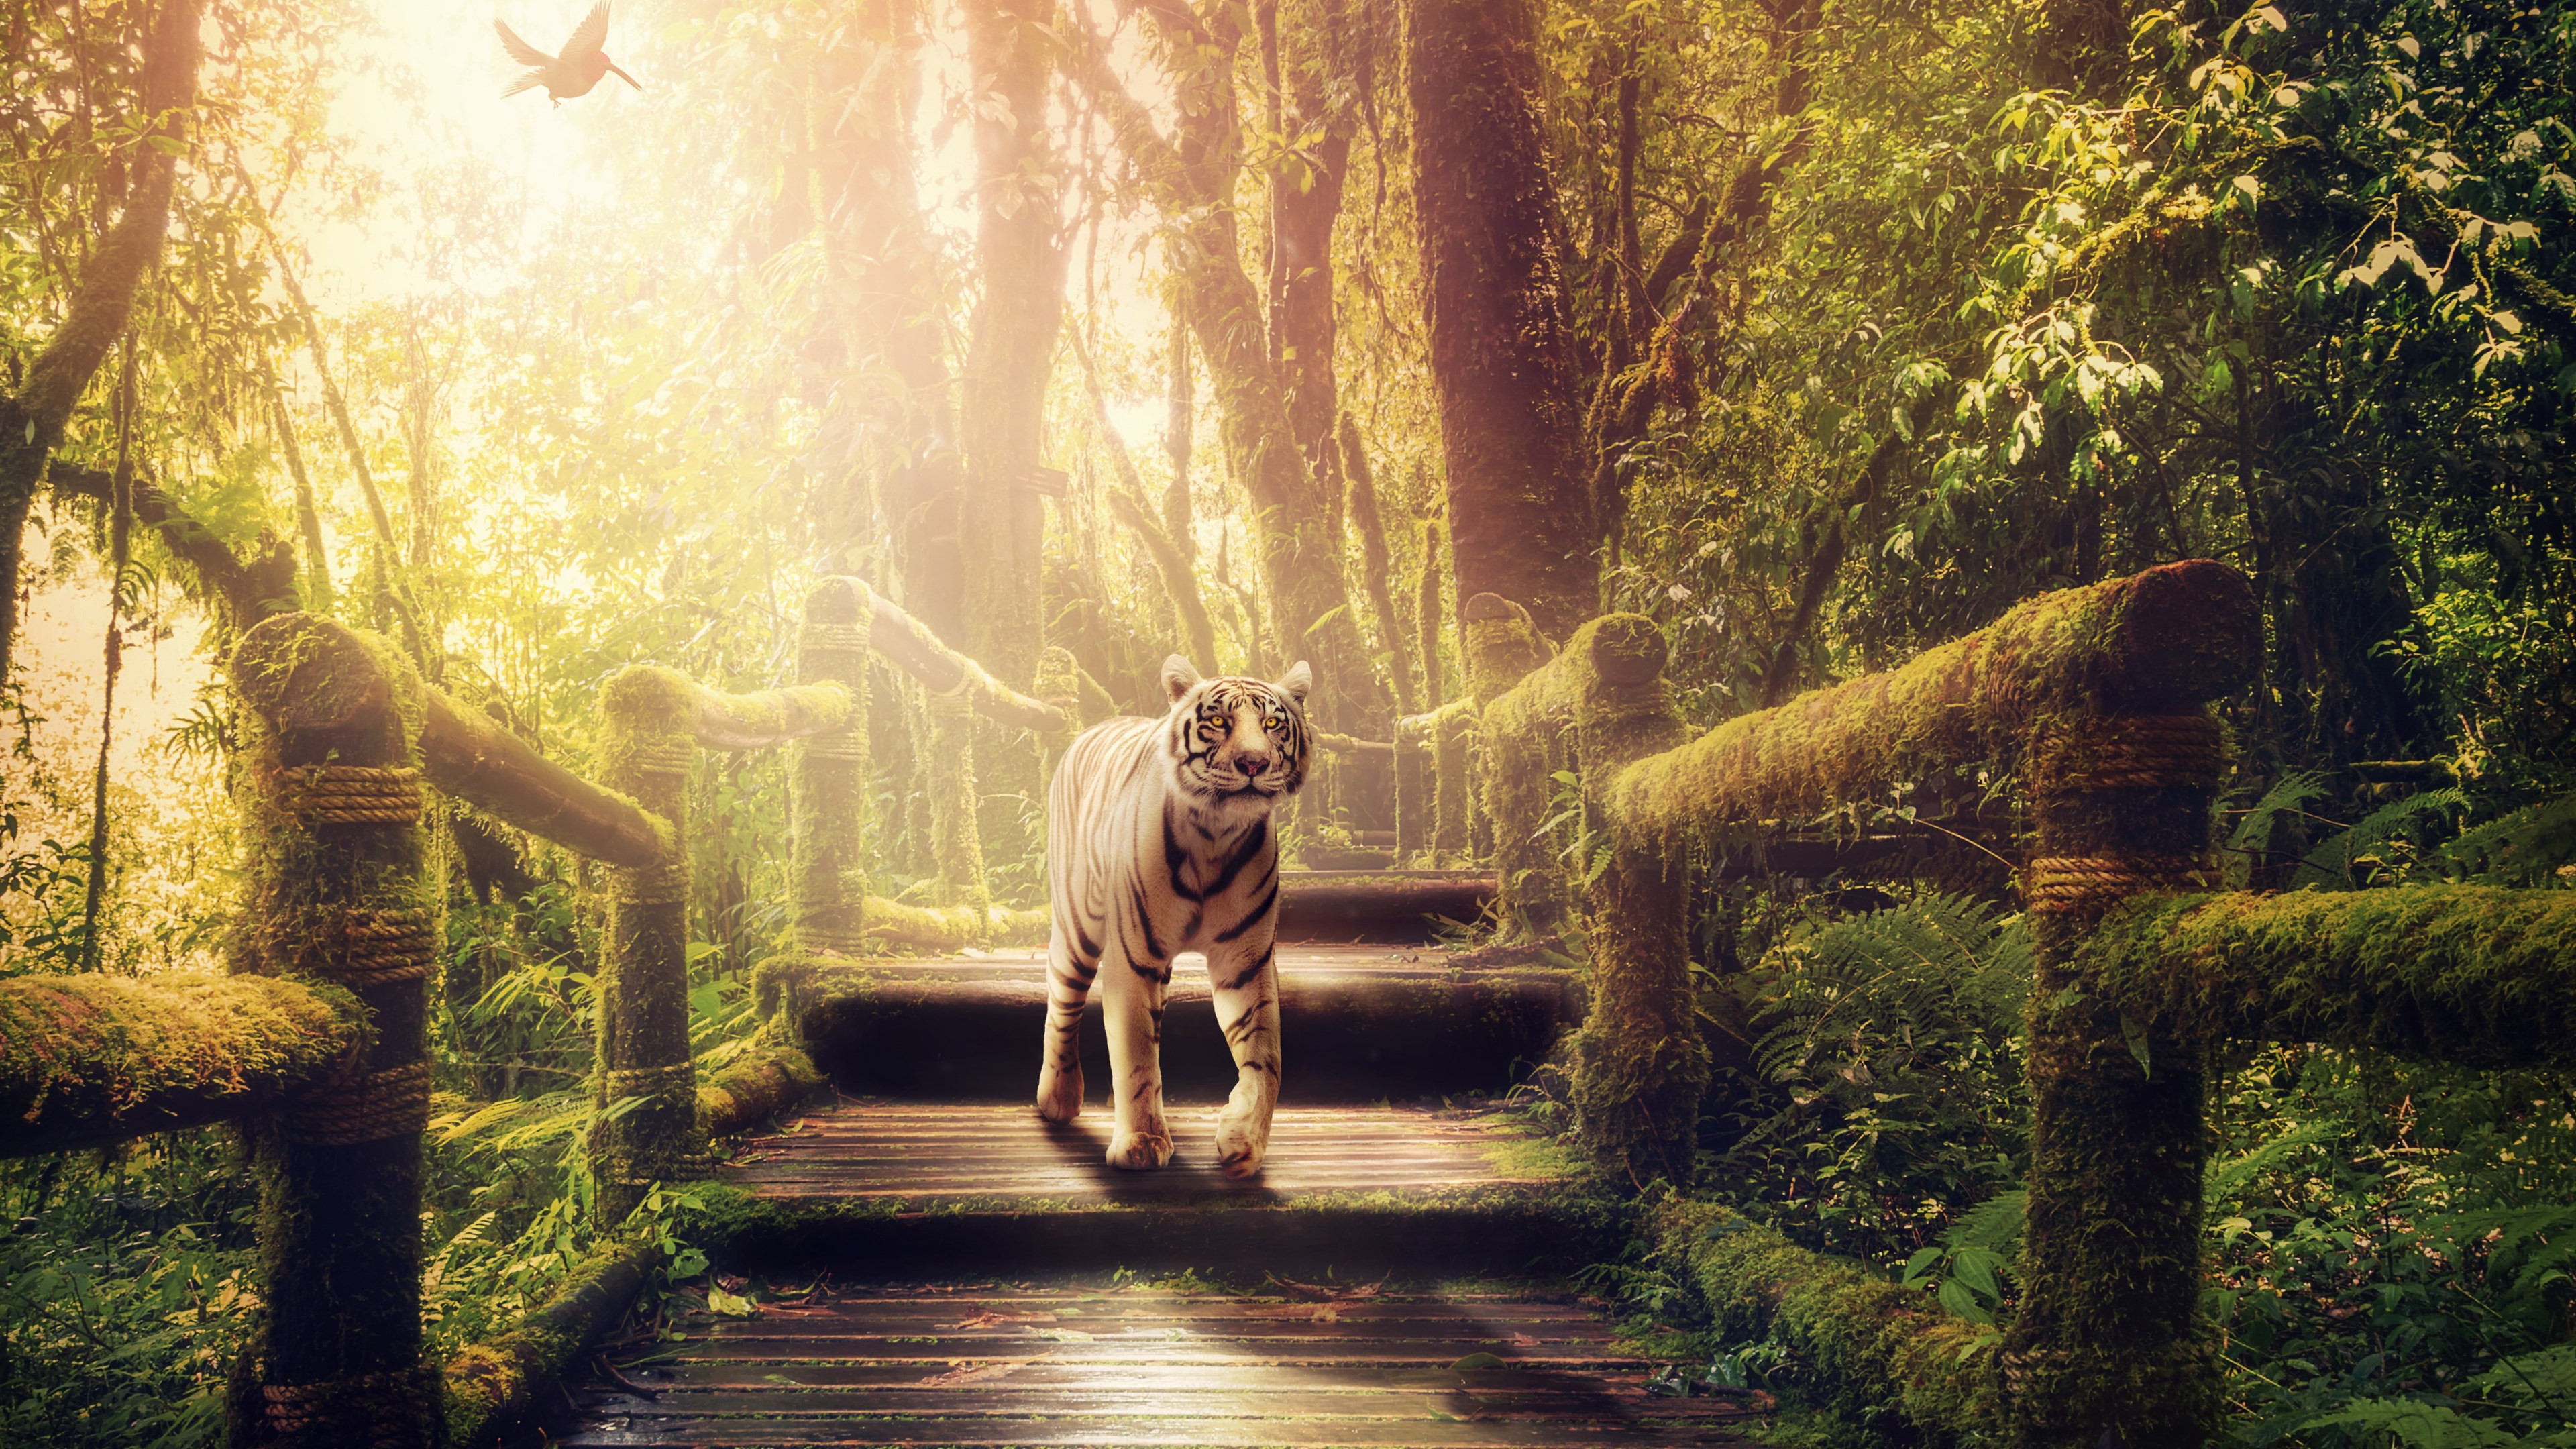 The tiger of jungle wallpaper 3840x2160